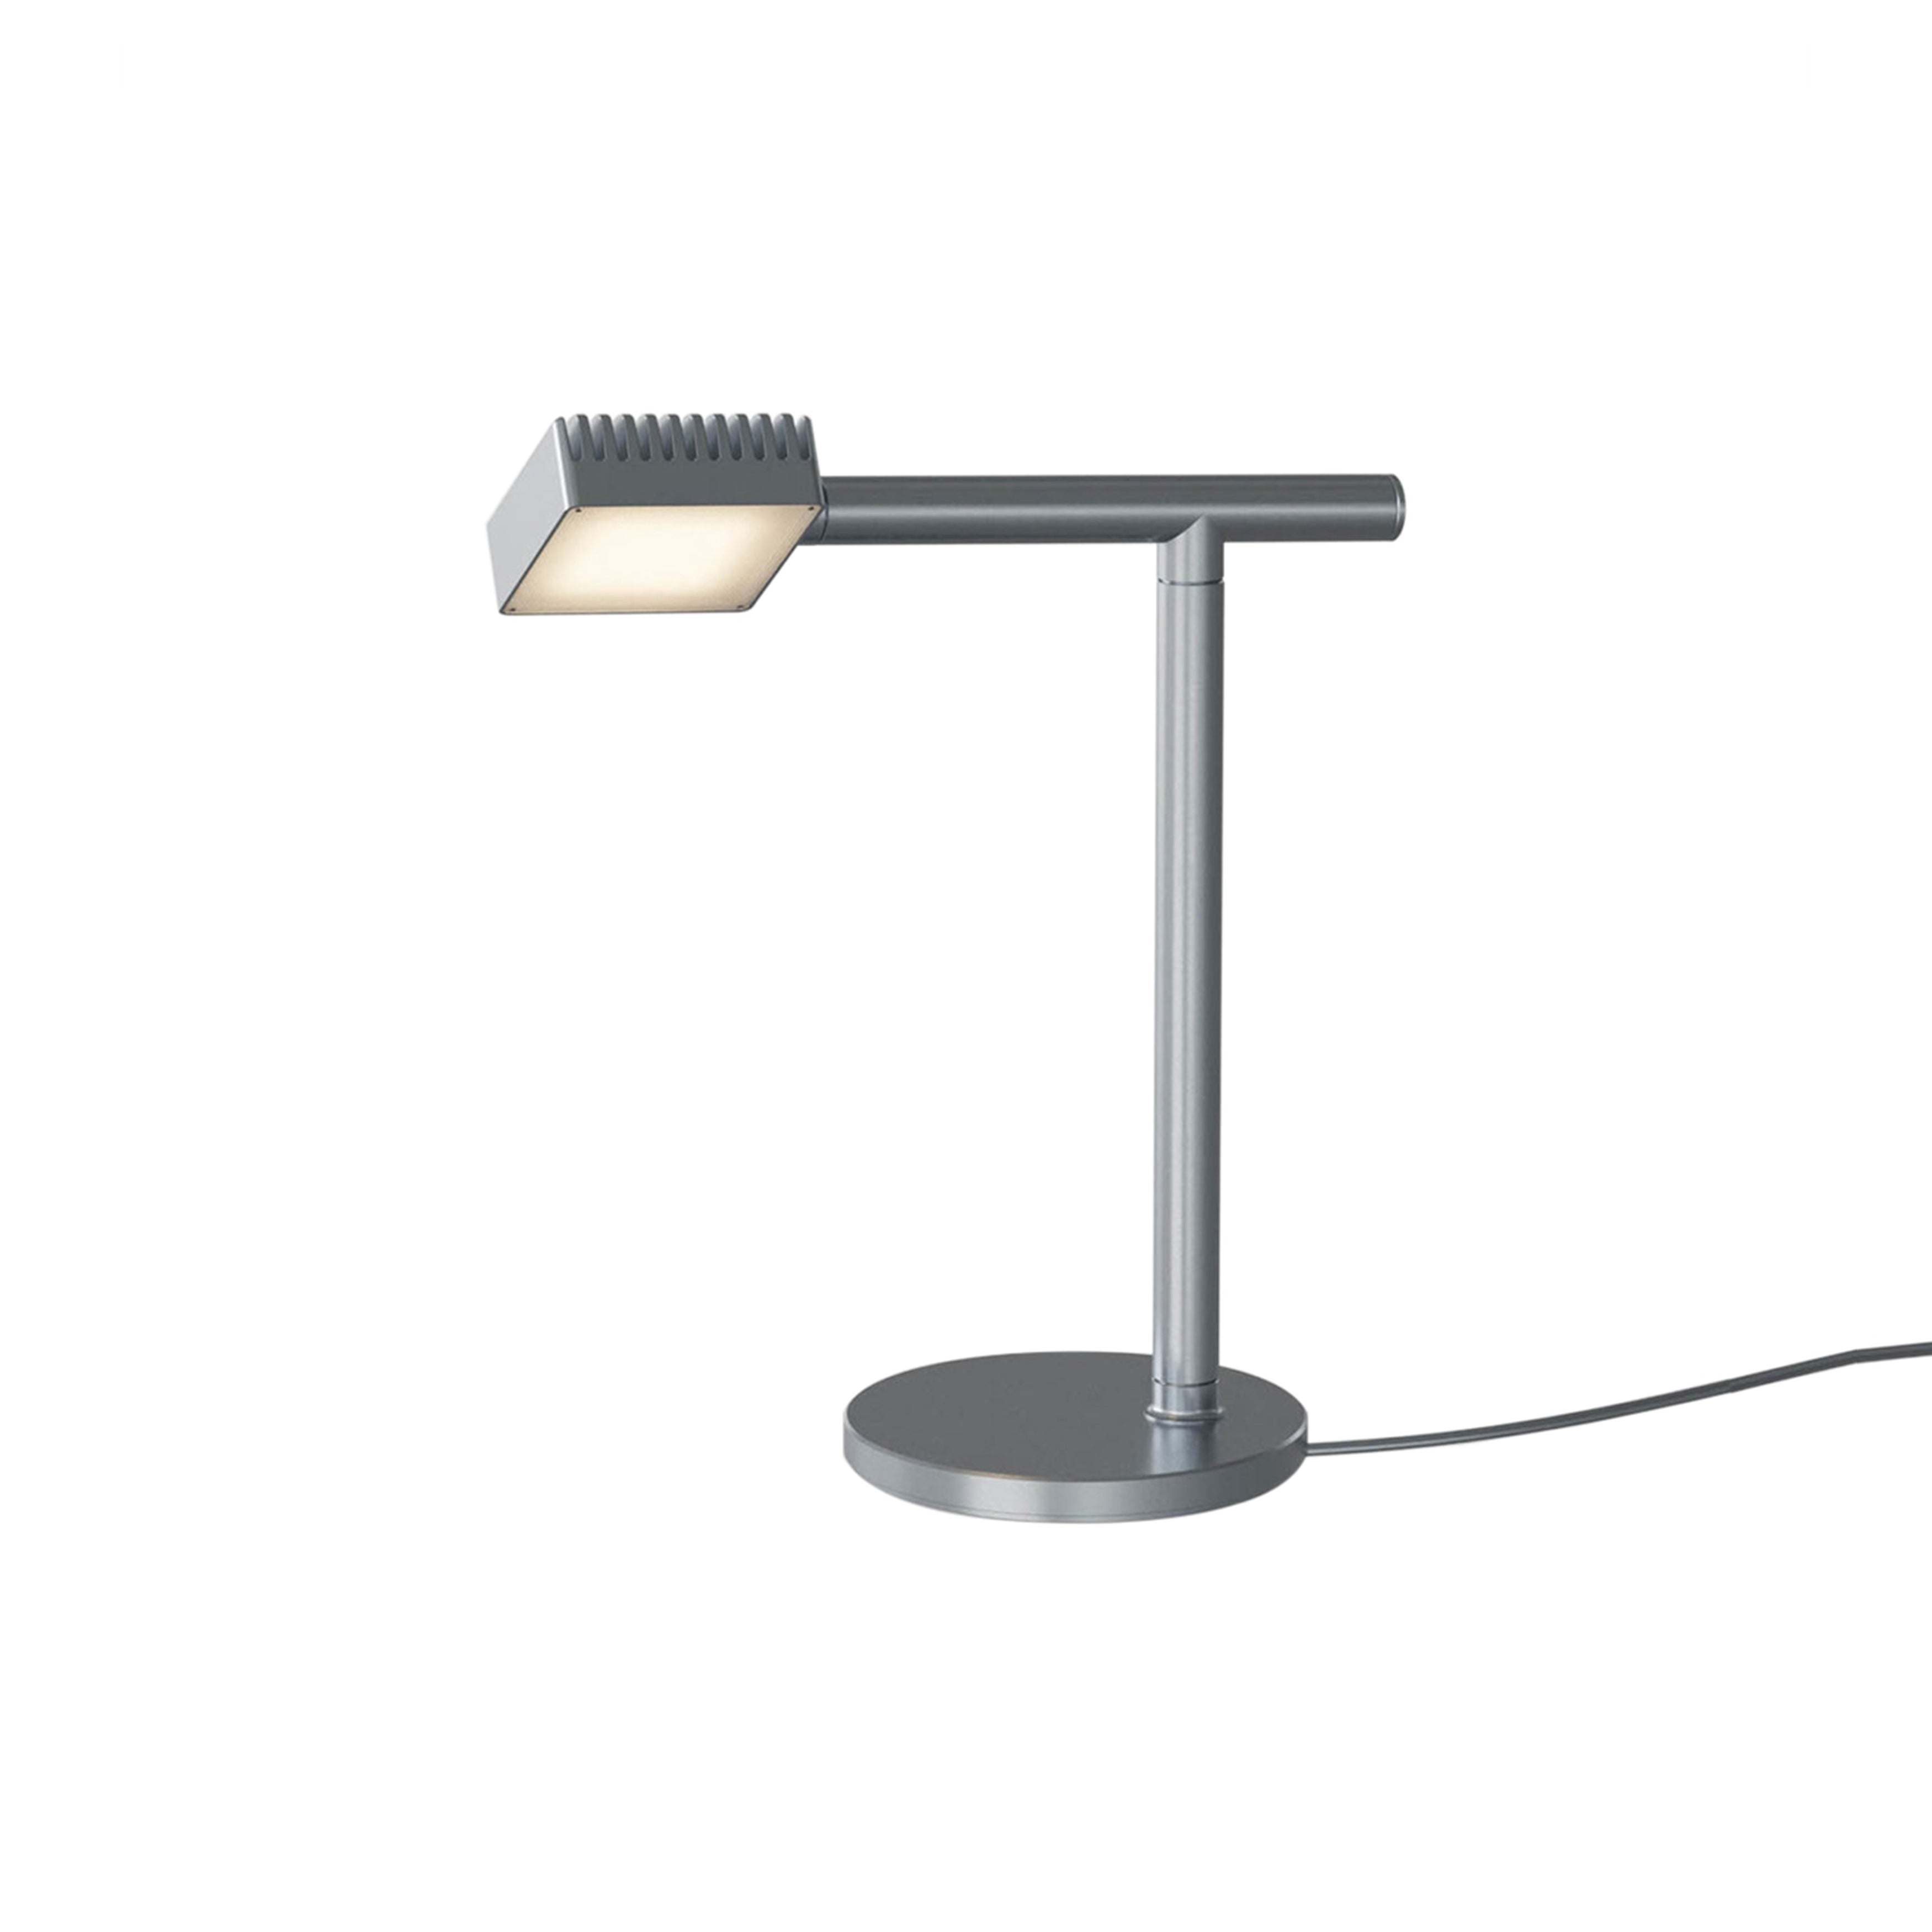 Dorval 02 Table Lamp: Aluminum + Aluminum